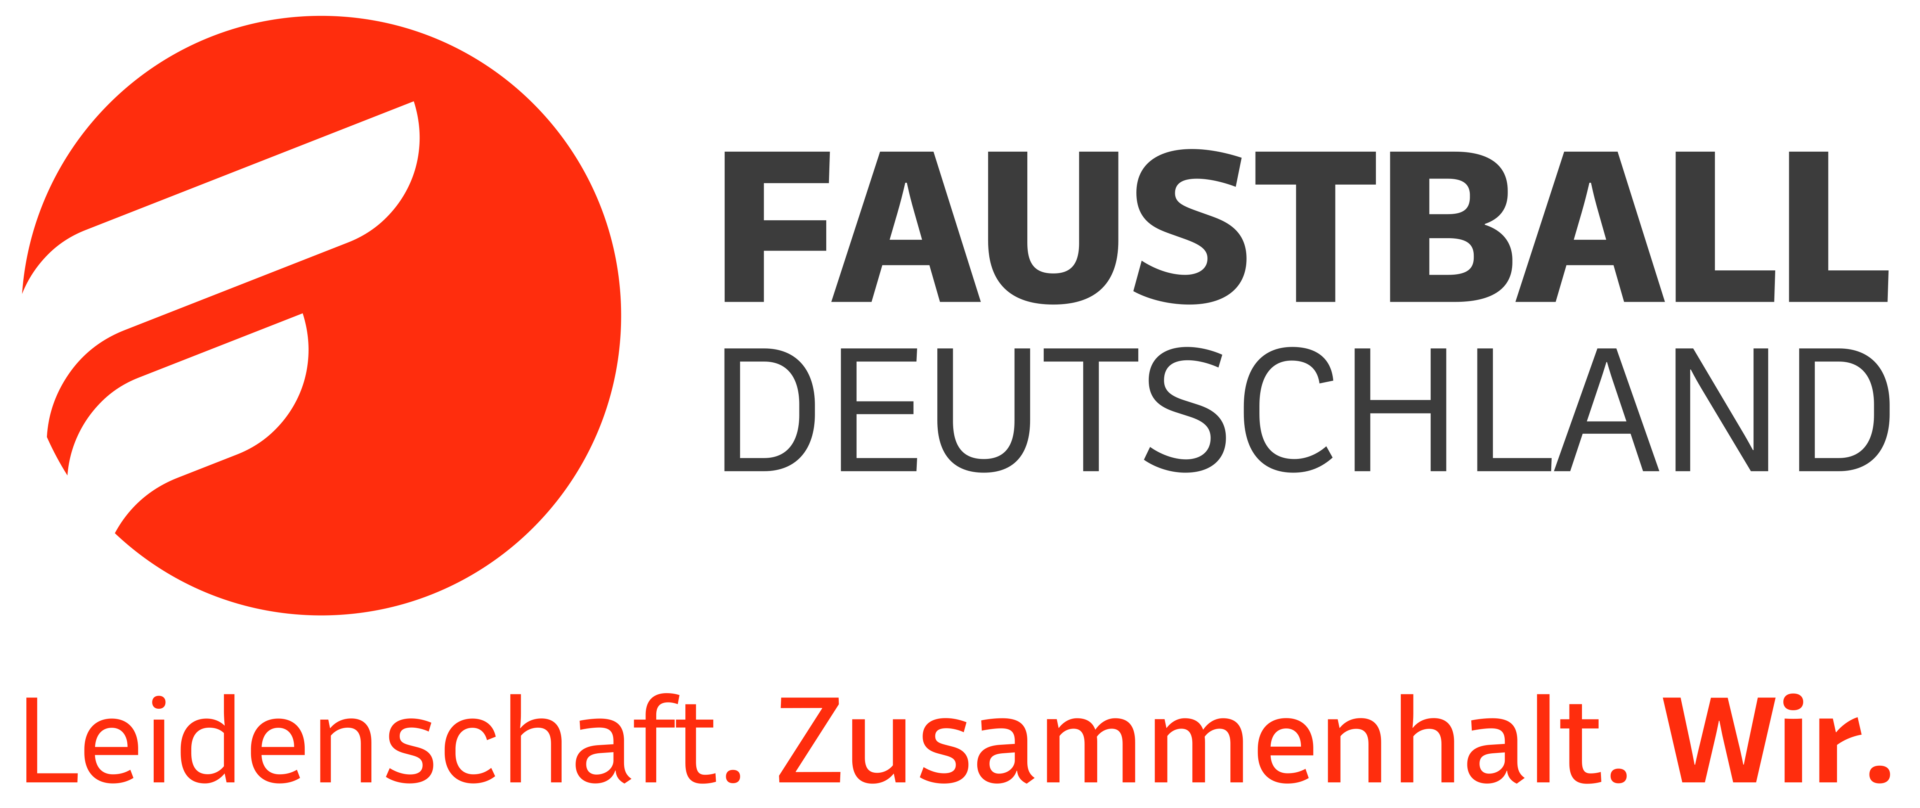 Faustball Deutschland